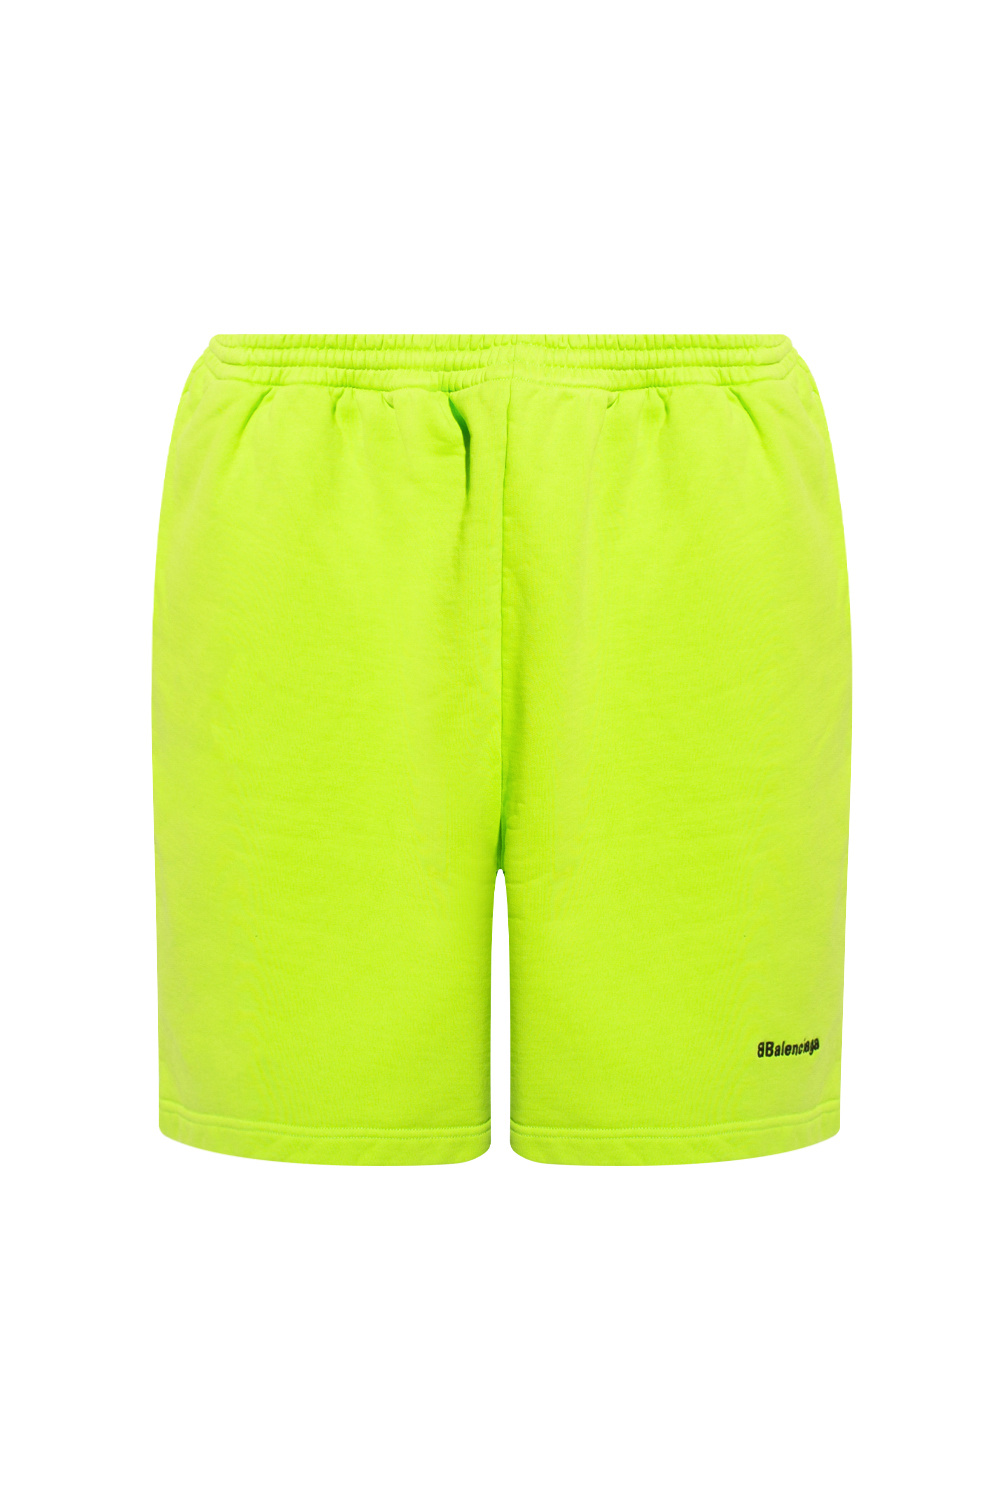 Balenciaga Kids logo-print jogging shorts - Green